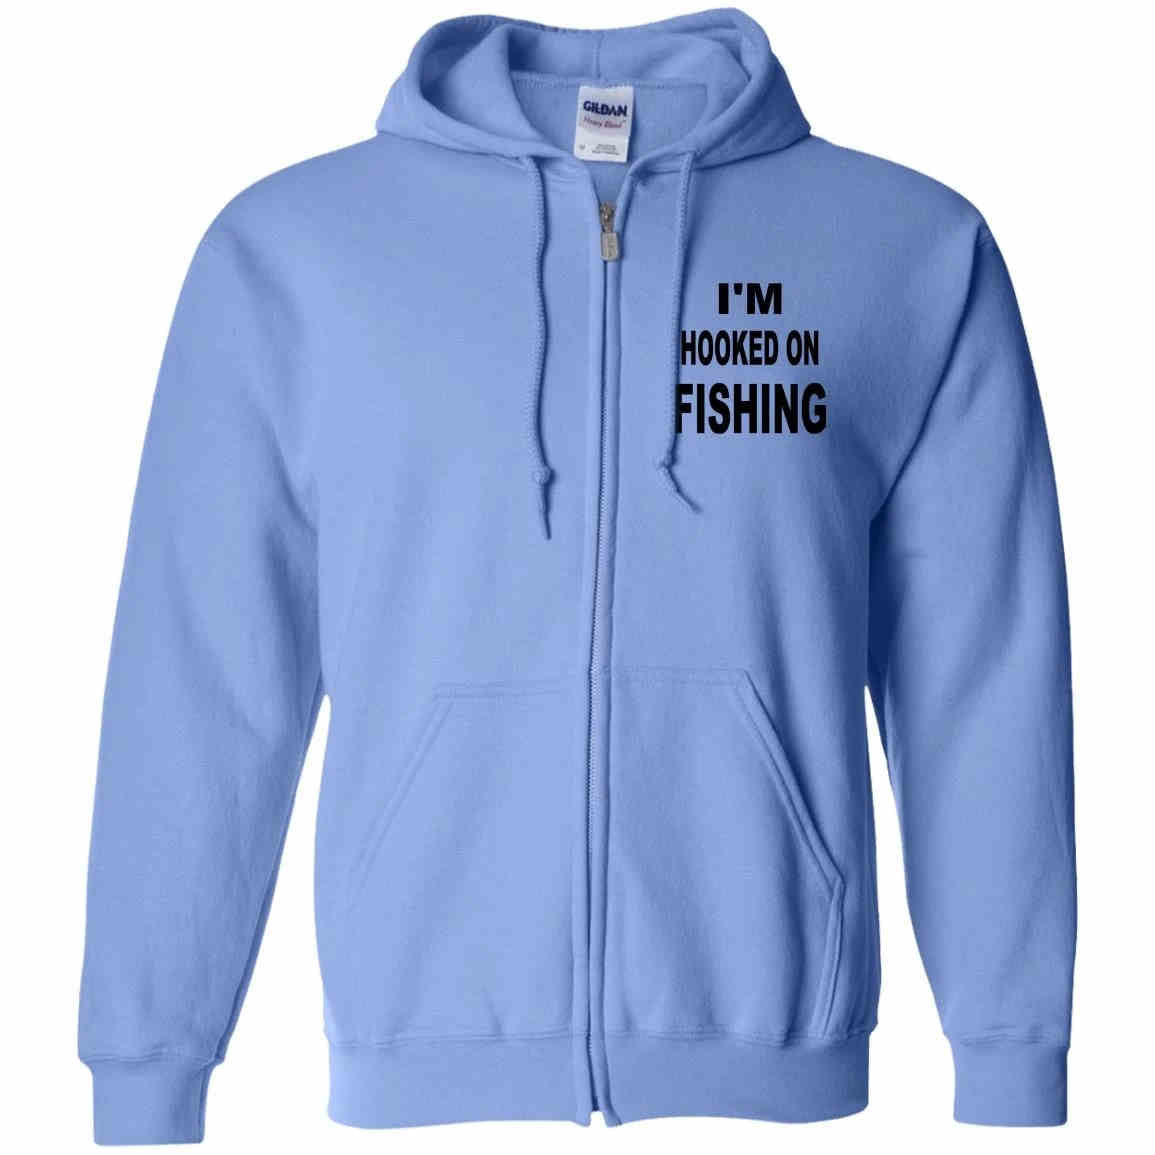 I'm hooked on fishing zip up hoodie b carolina blue